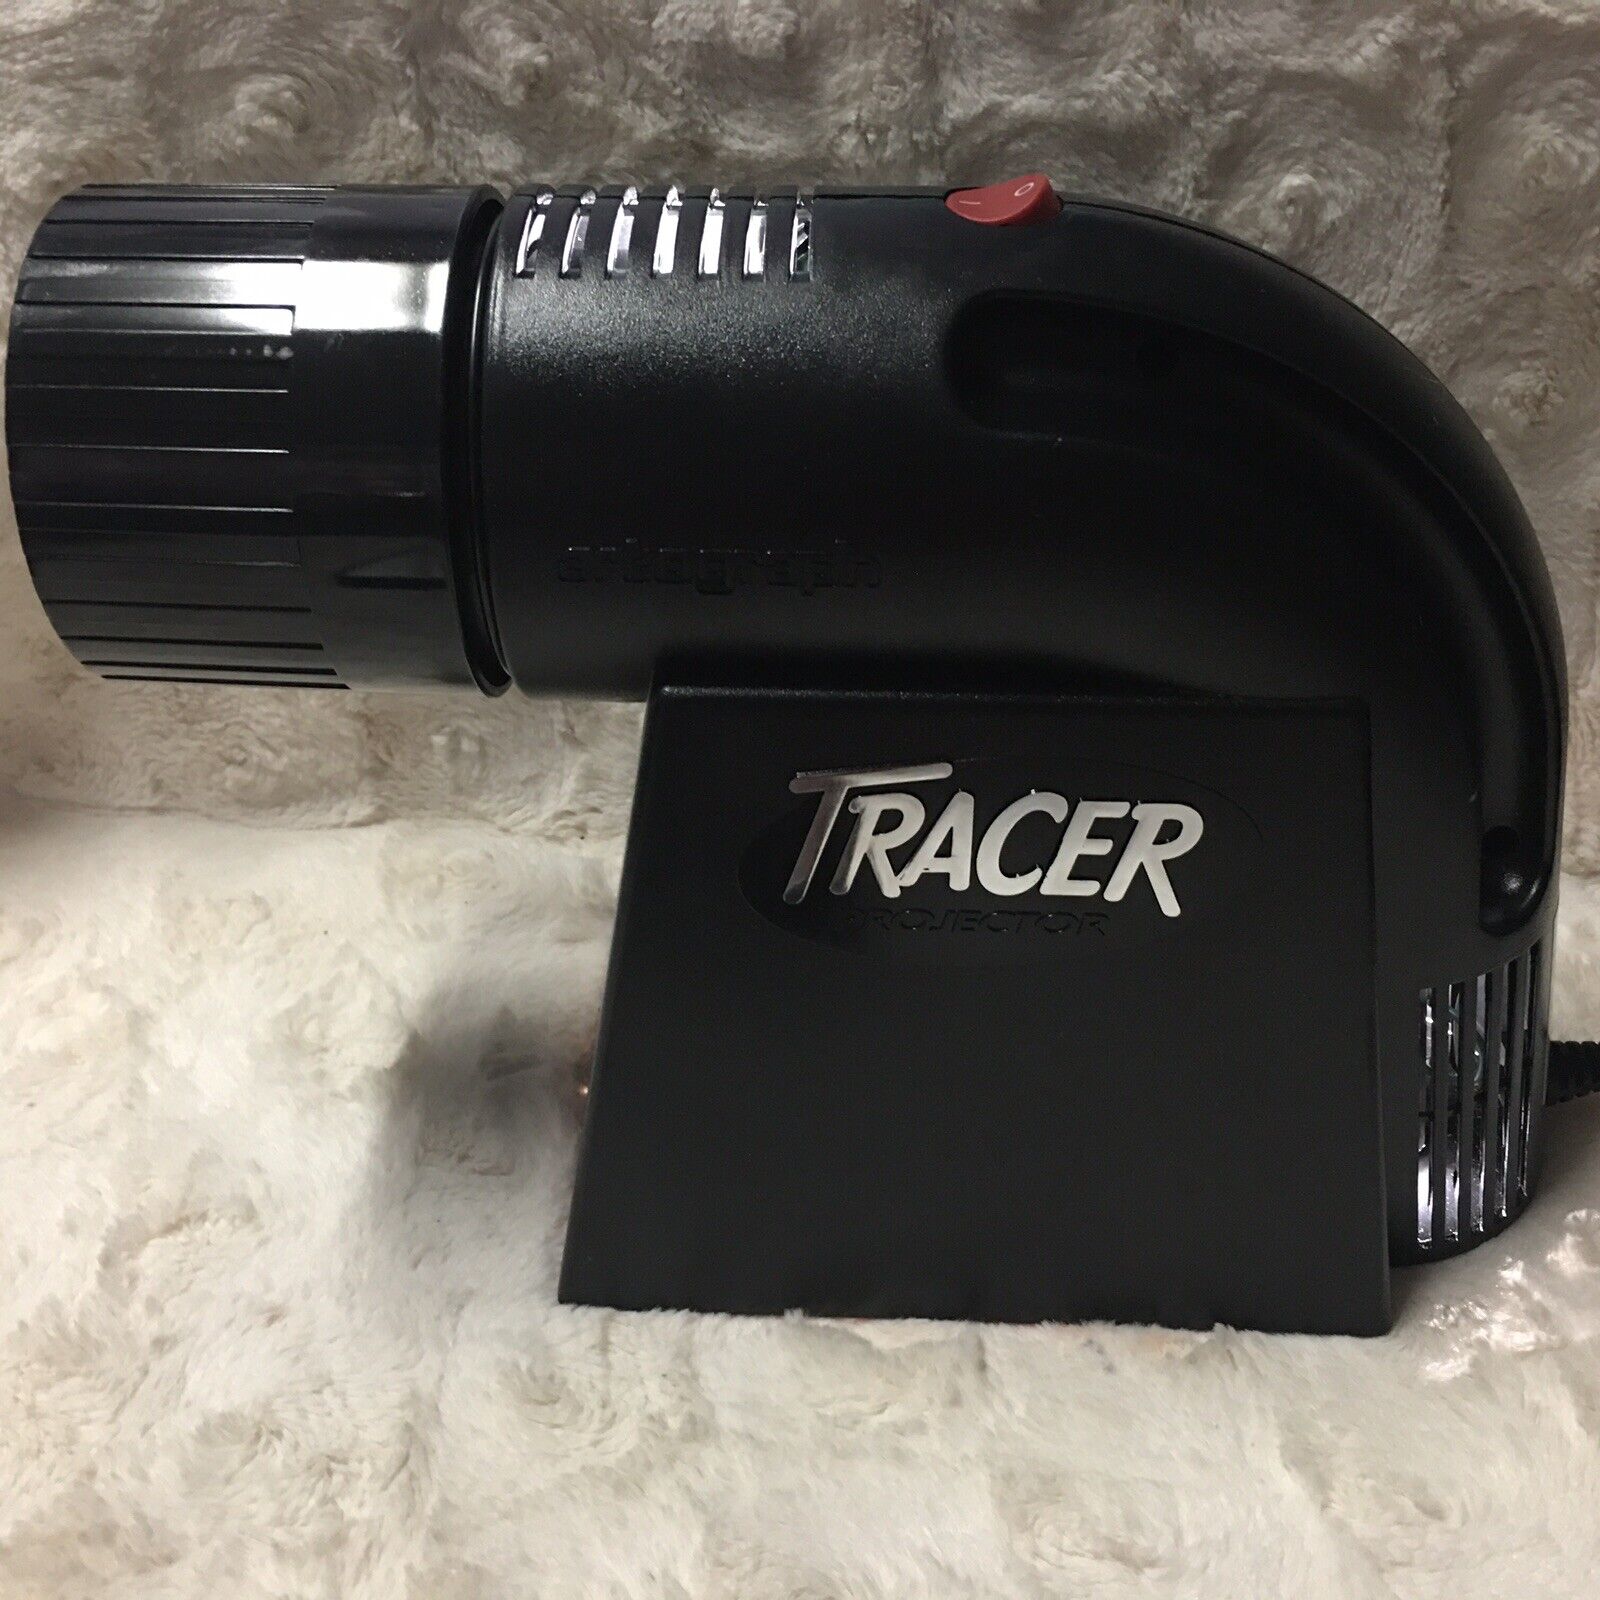 Artograph 225-360 Tracer Projector /enlarger Designs Tested No Box Nomenu￼￼/read